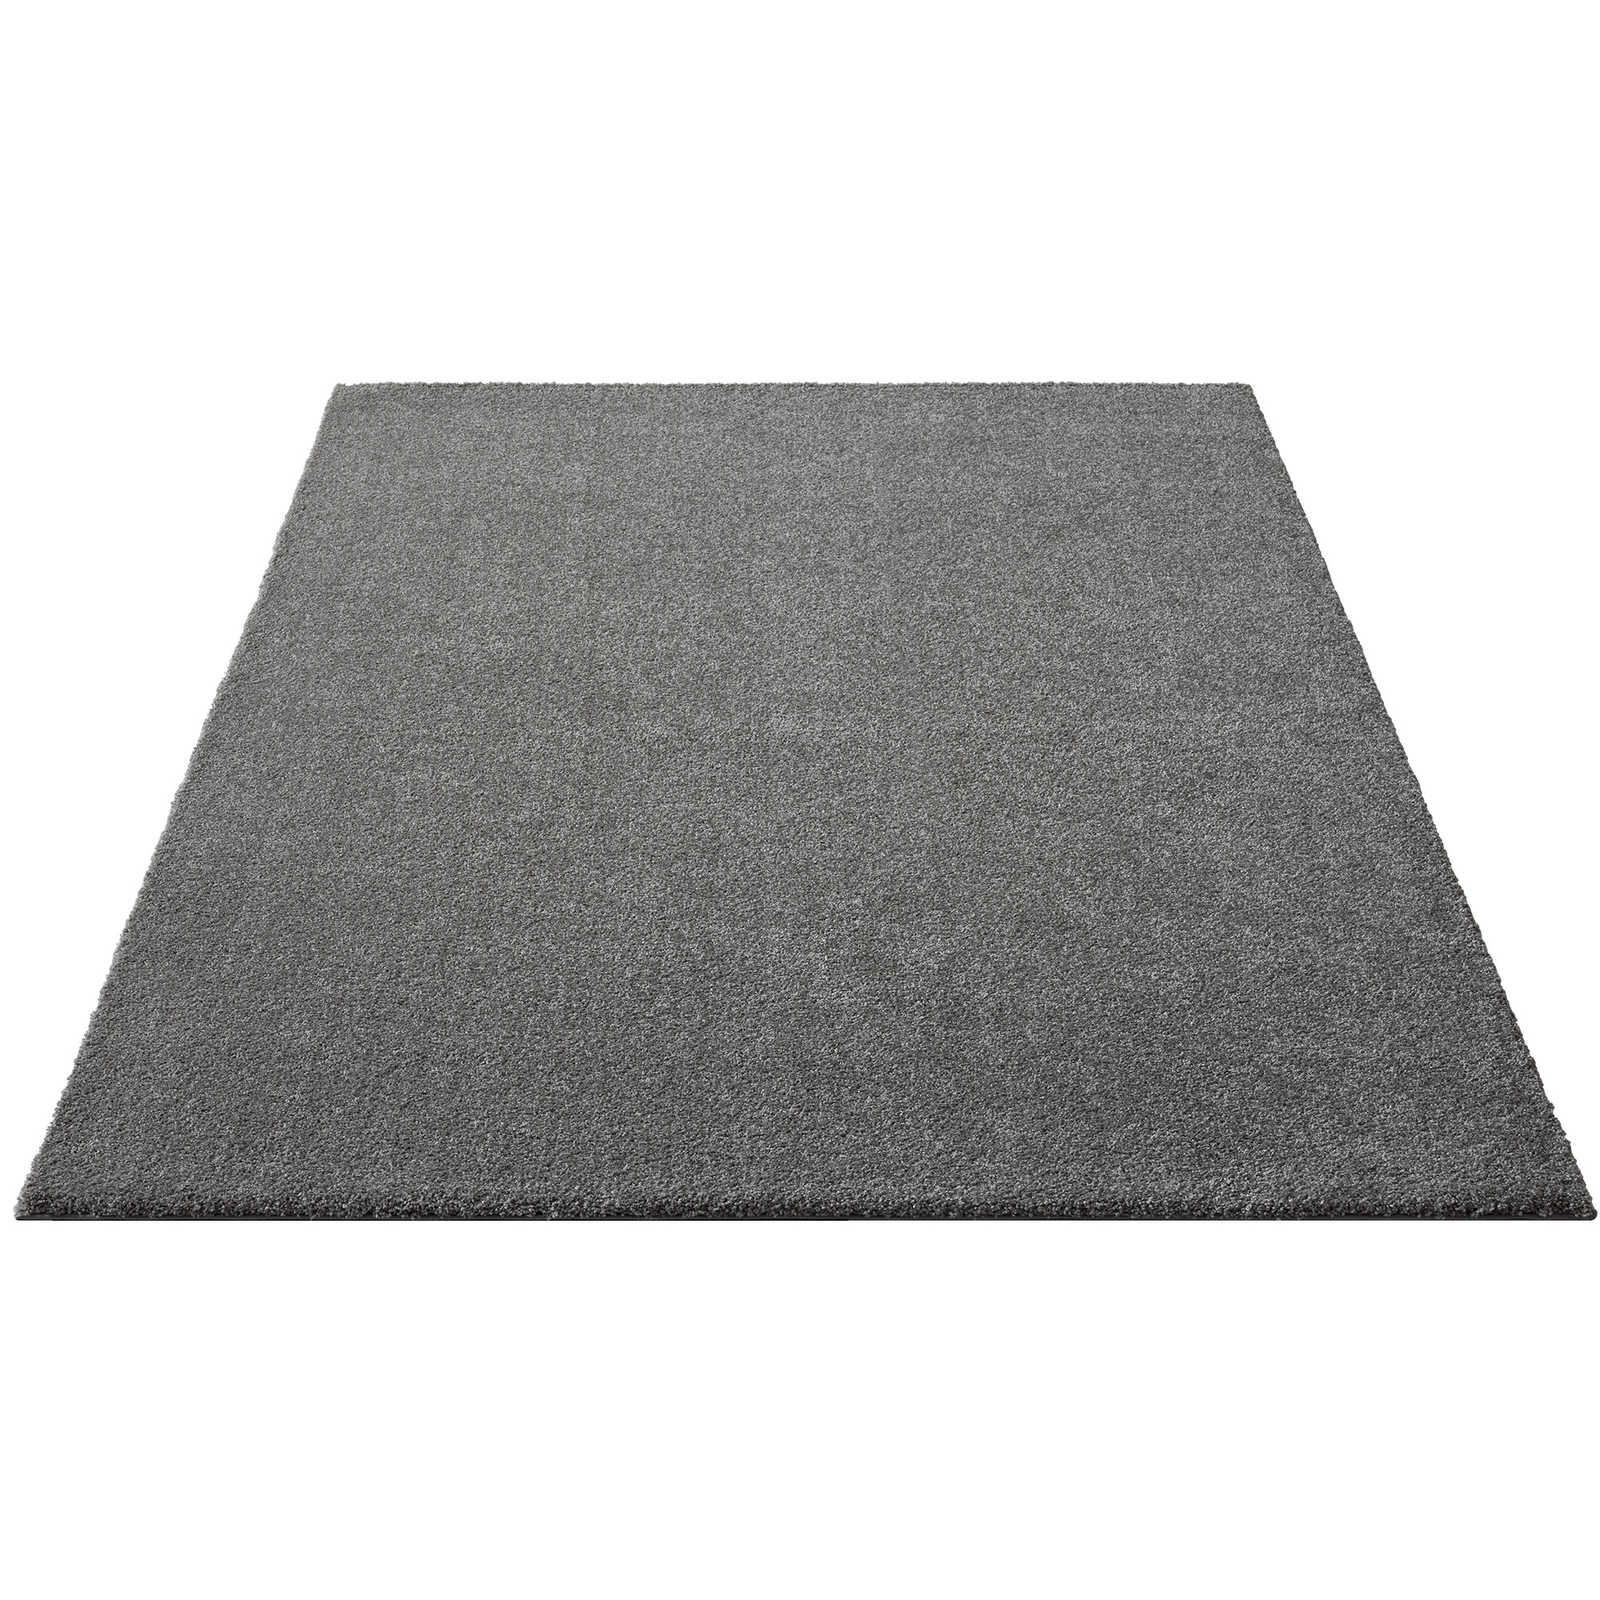 Fluffy short pile carpet in grey - 290 x 200 cm
